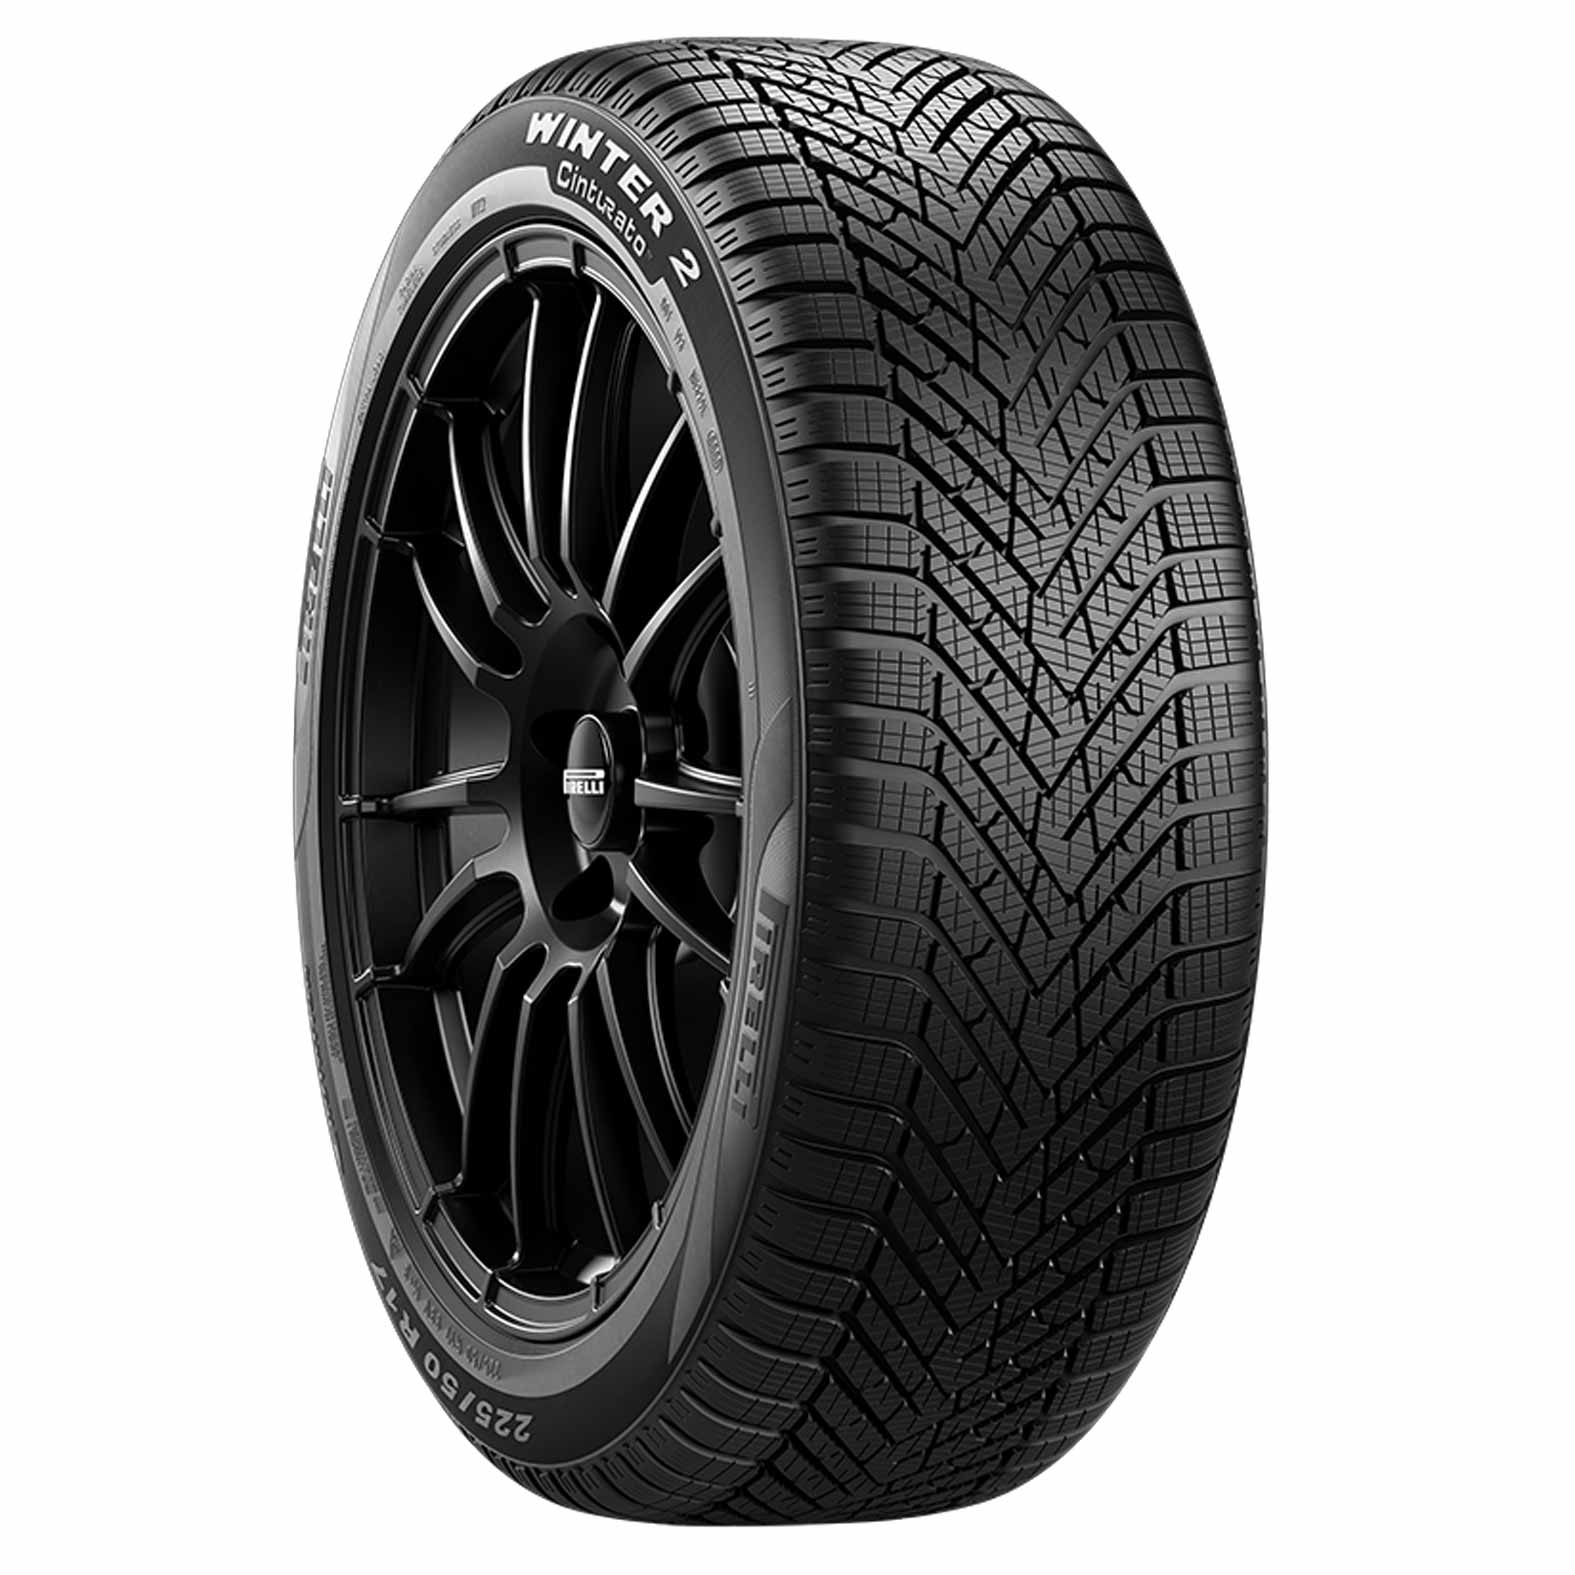 Pirelli Winter Cinturato 2 Tires for Winter | Kal Tire